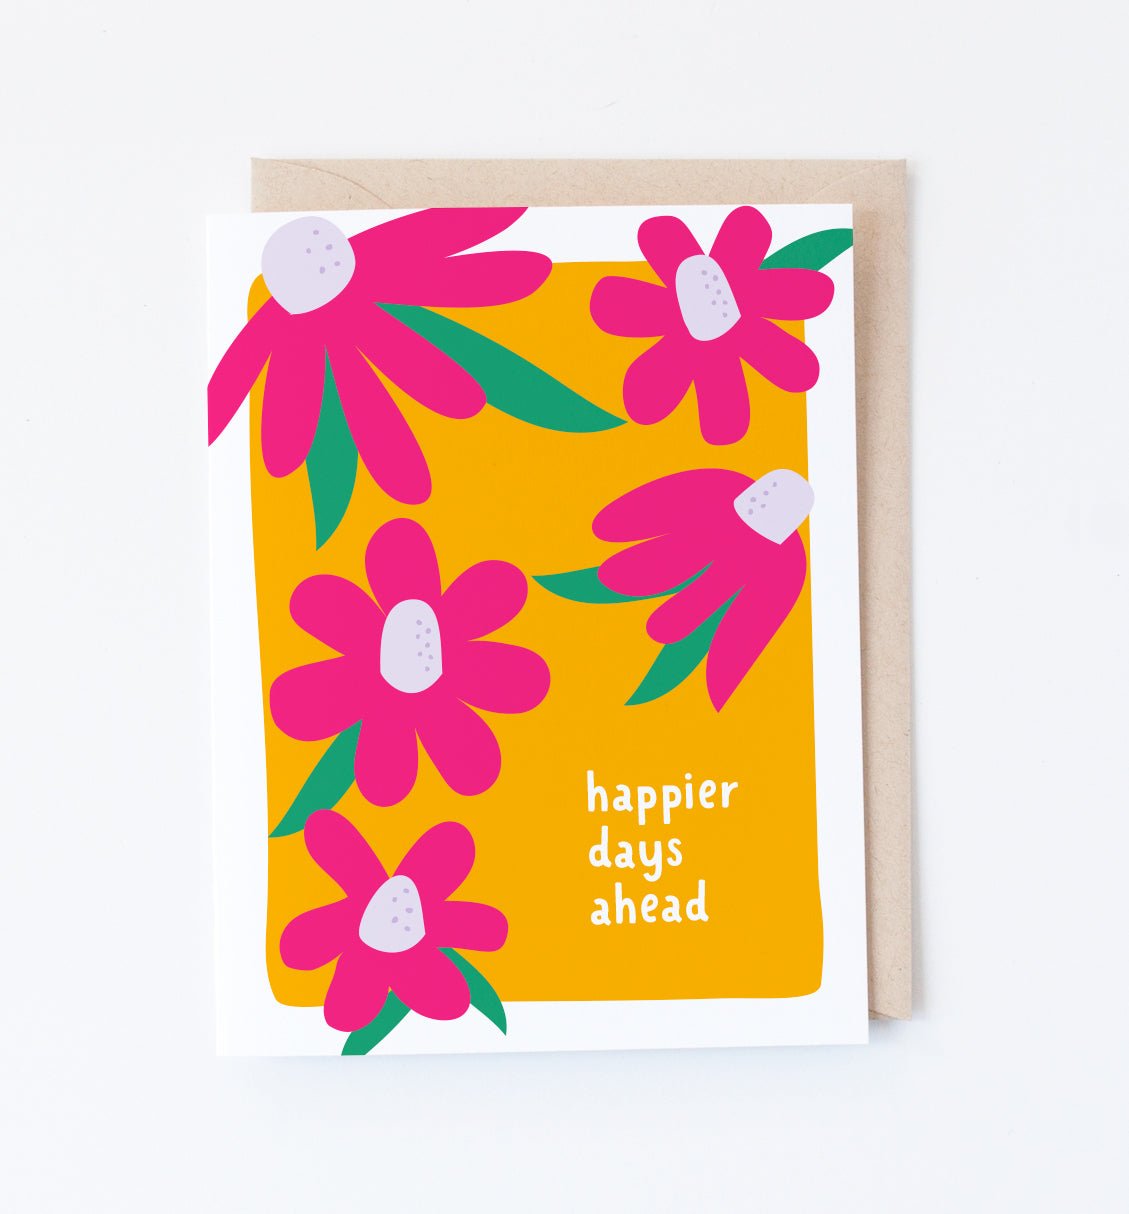 Happier Days Ahead greeting card